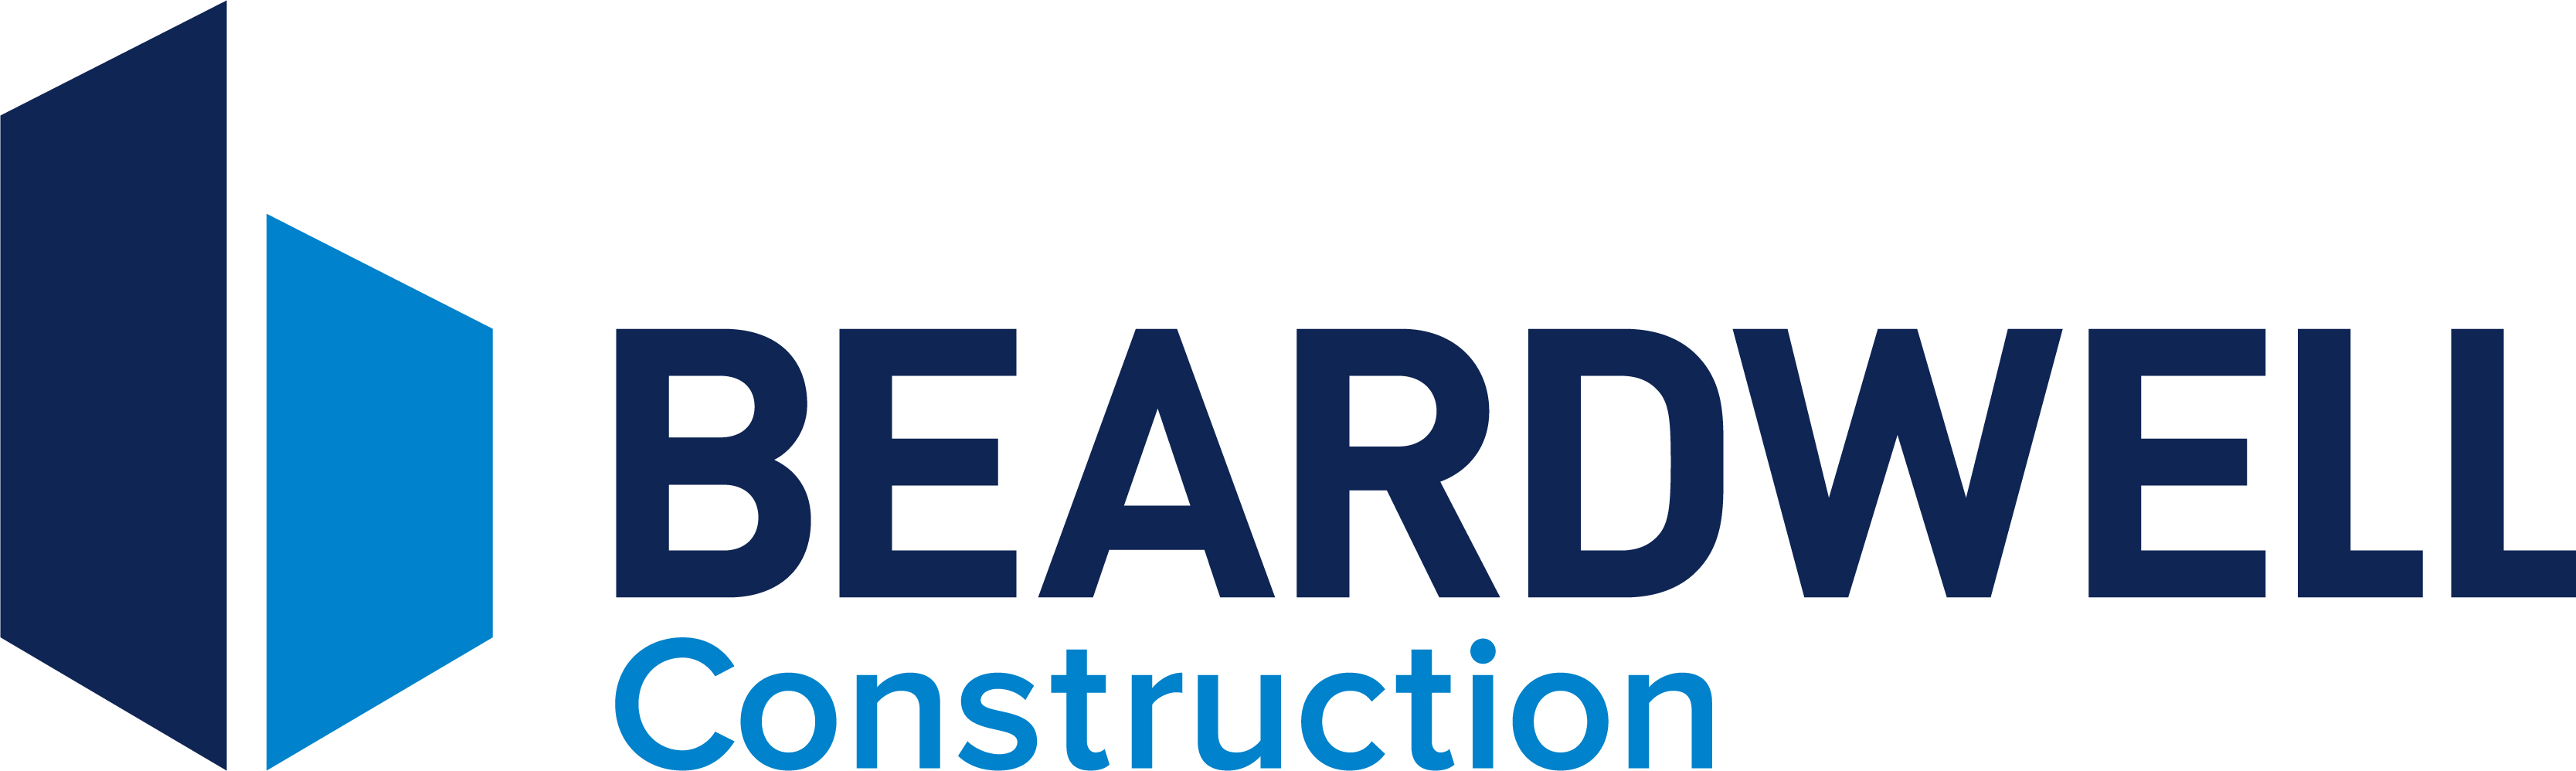 Beardwell Construction Ltd